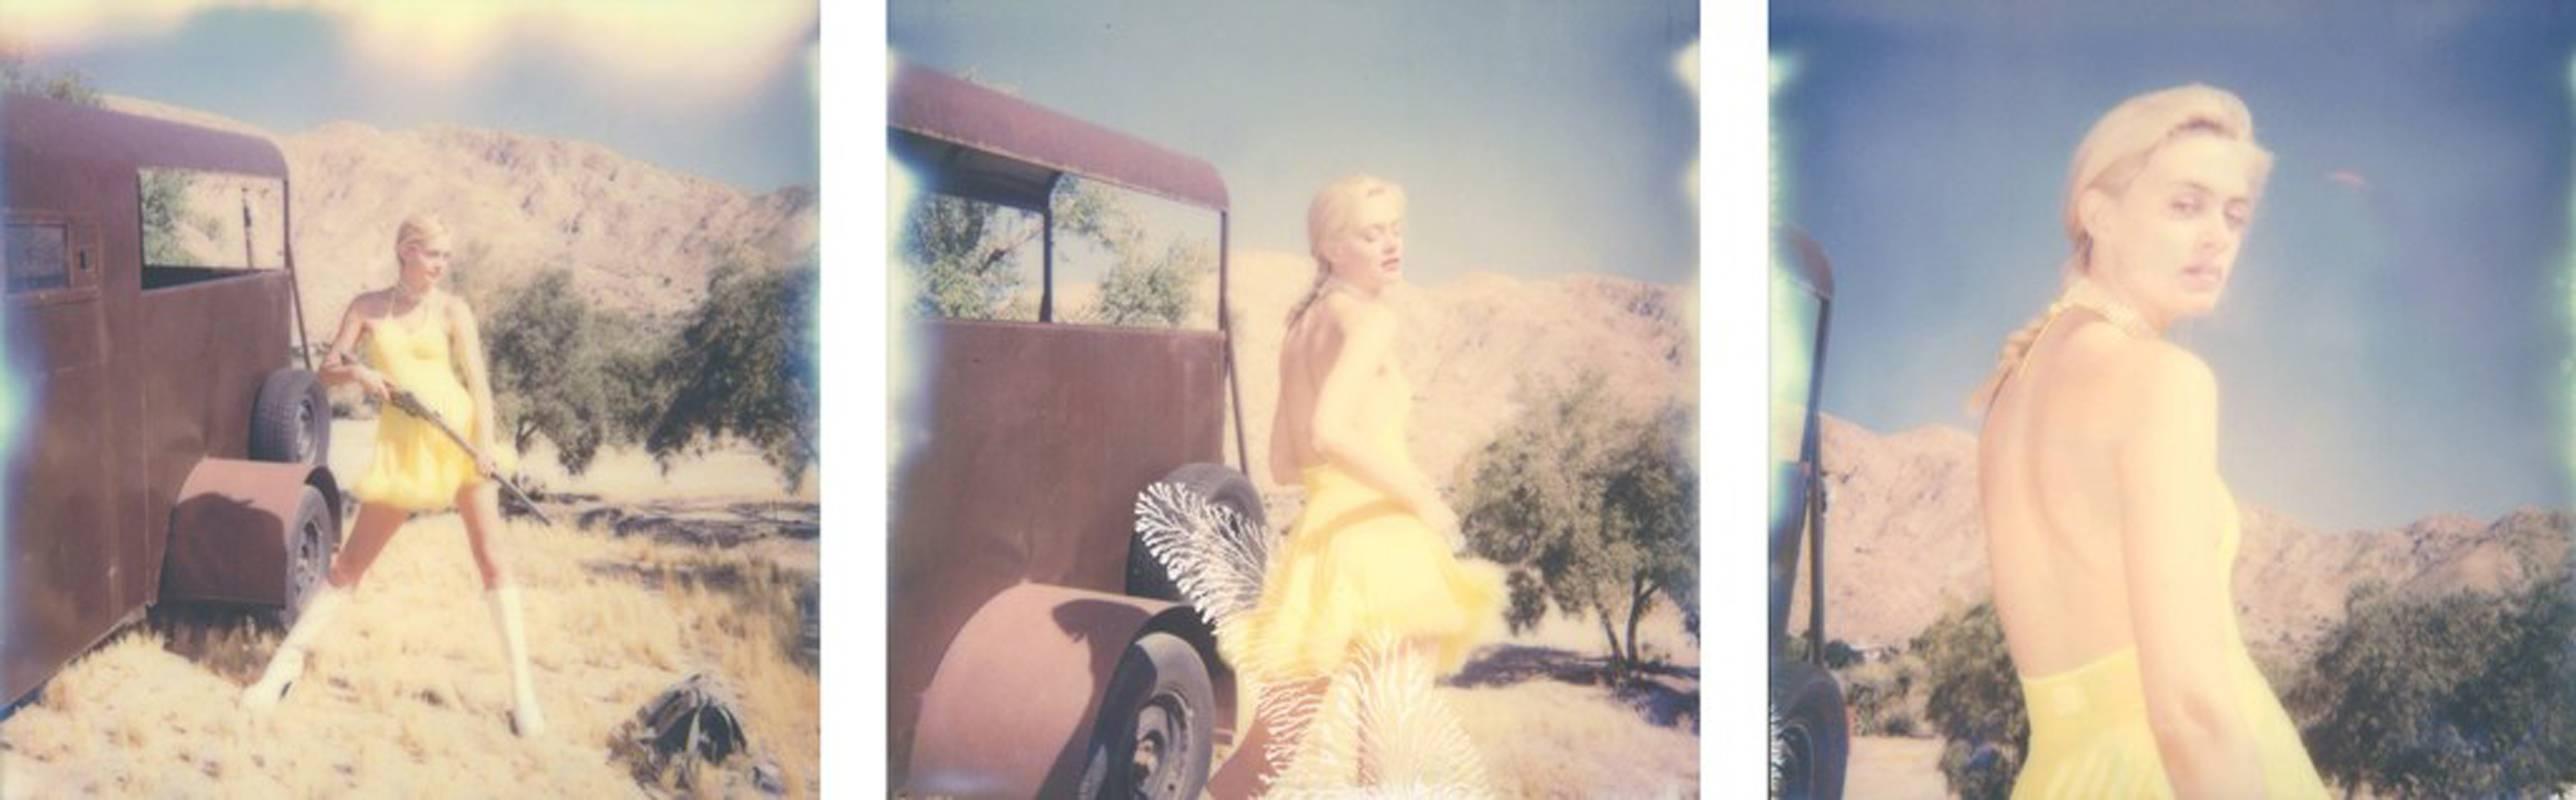 Stefanie Schneider Figurative Photograph - Marilyn - Heavenly Falls